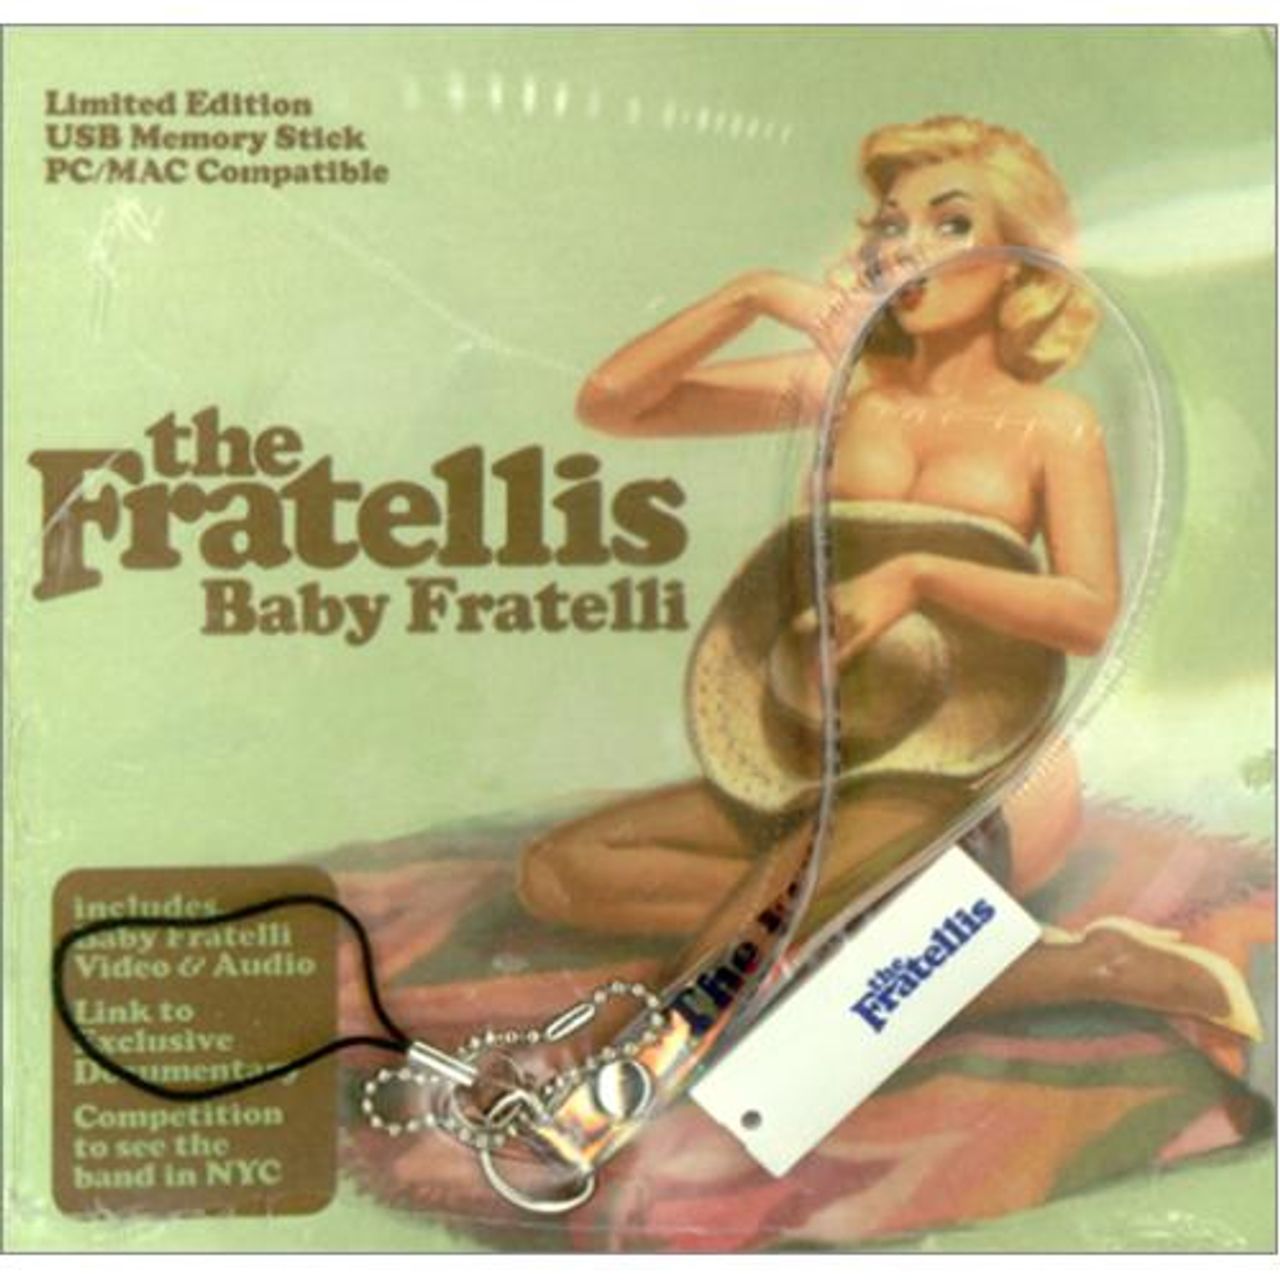 The Fratellis Baby Fratelli UK CD-ROM 1726724